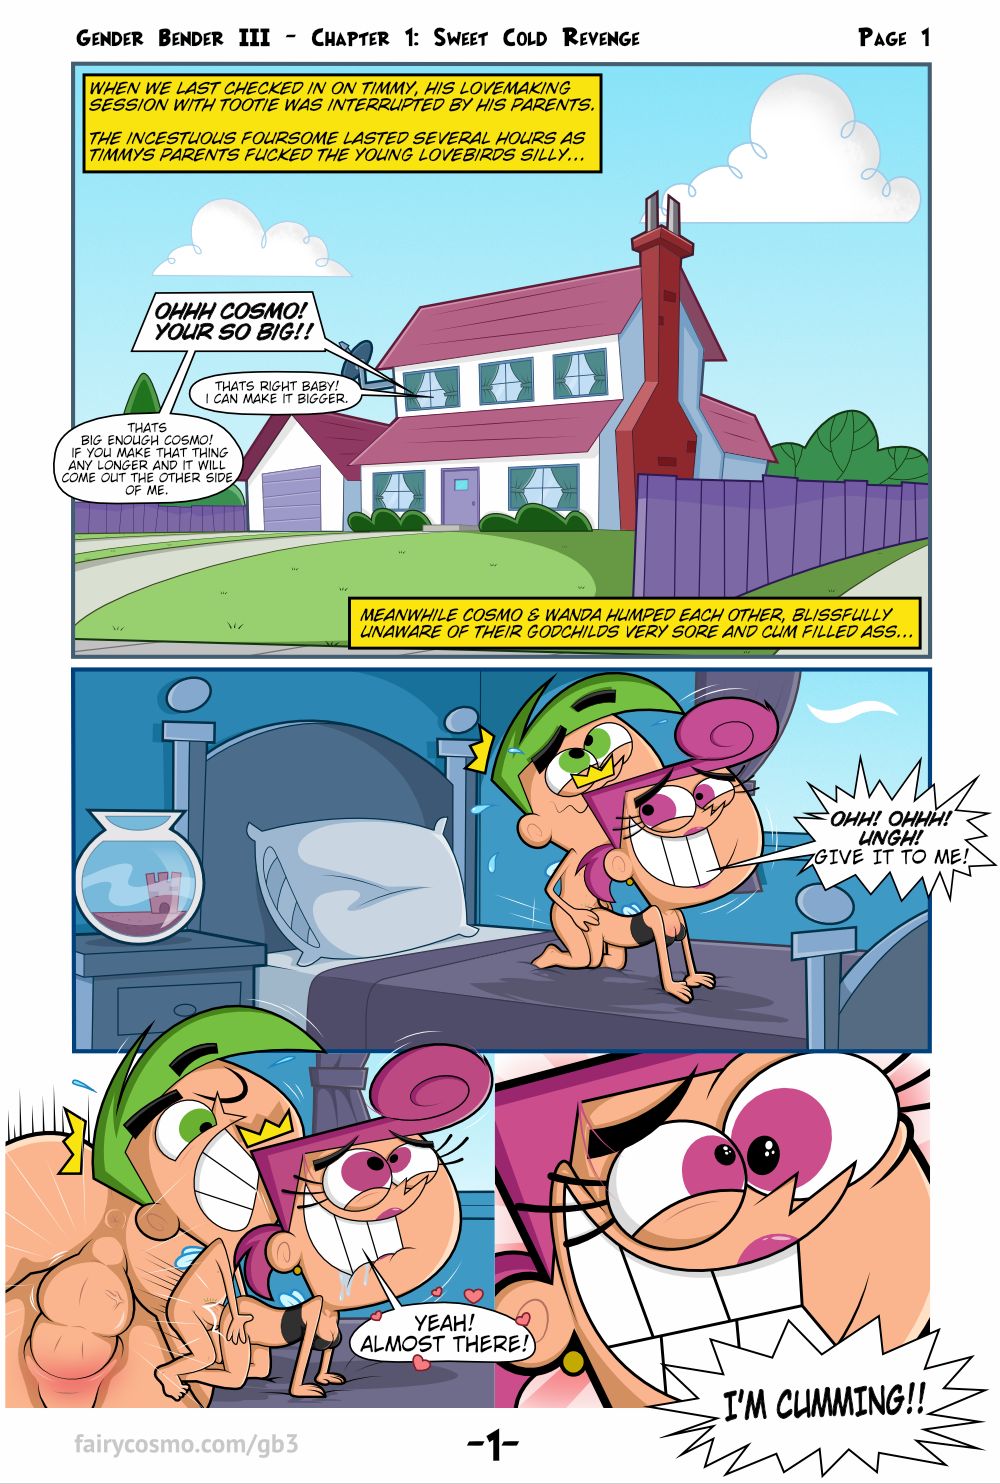 Fairly Odd Parents Toon - Gender Bender III (Fairly Odd Parents) by FairyCosmo - Porn Cartoon Comics